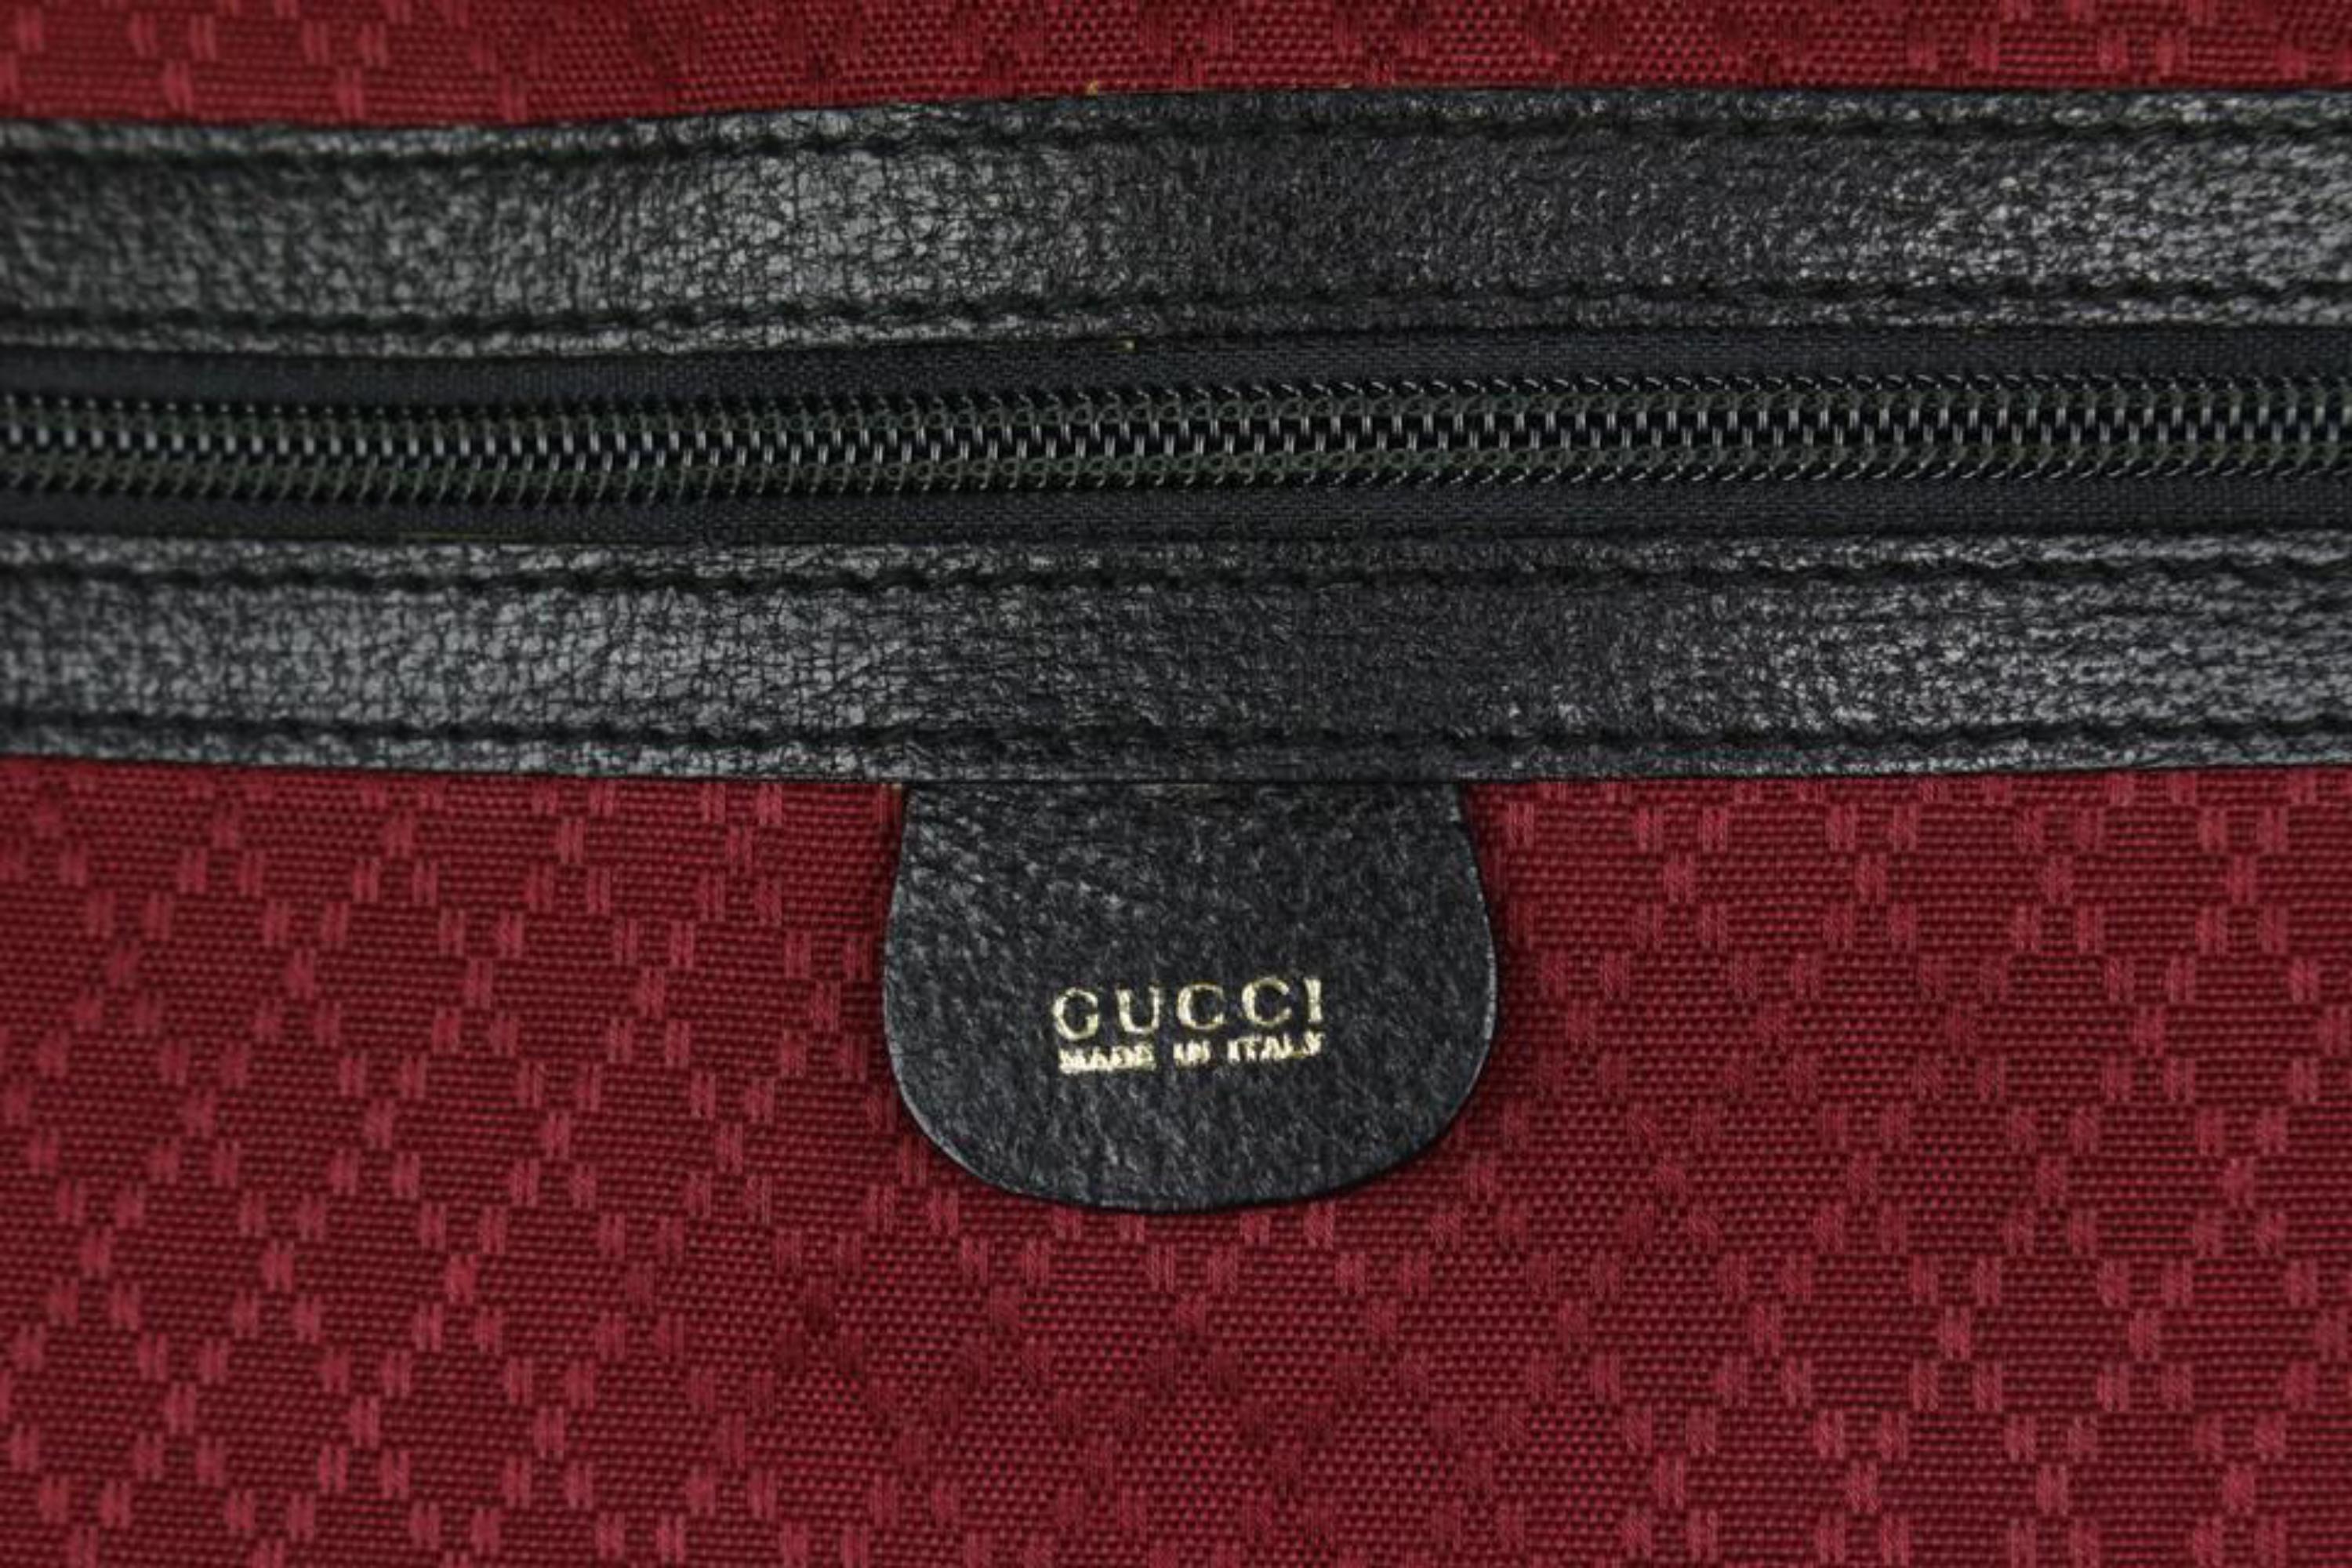 Gucci Large Black Monogram GG Suitcase Luggage 1026g47 2